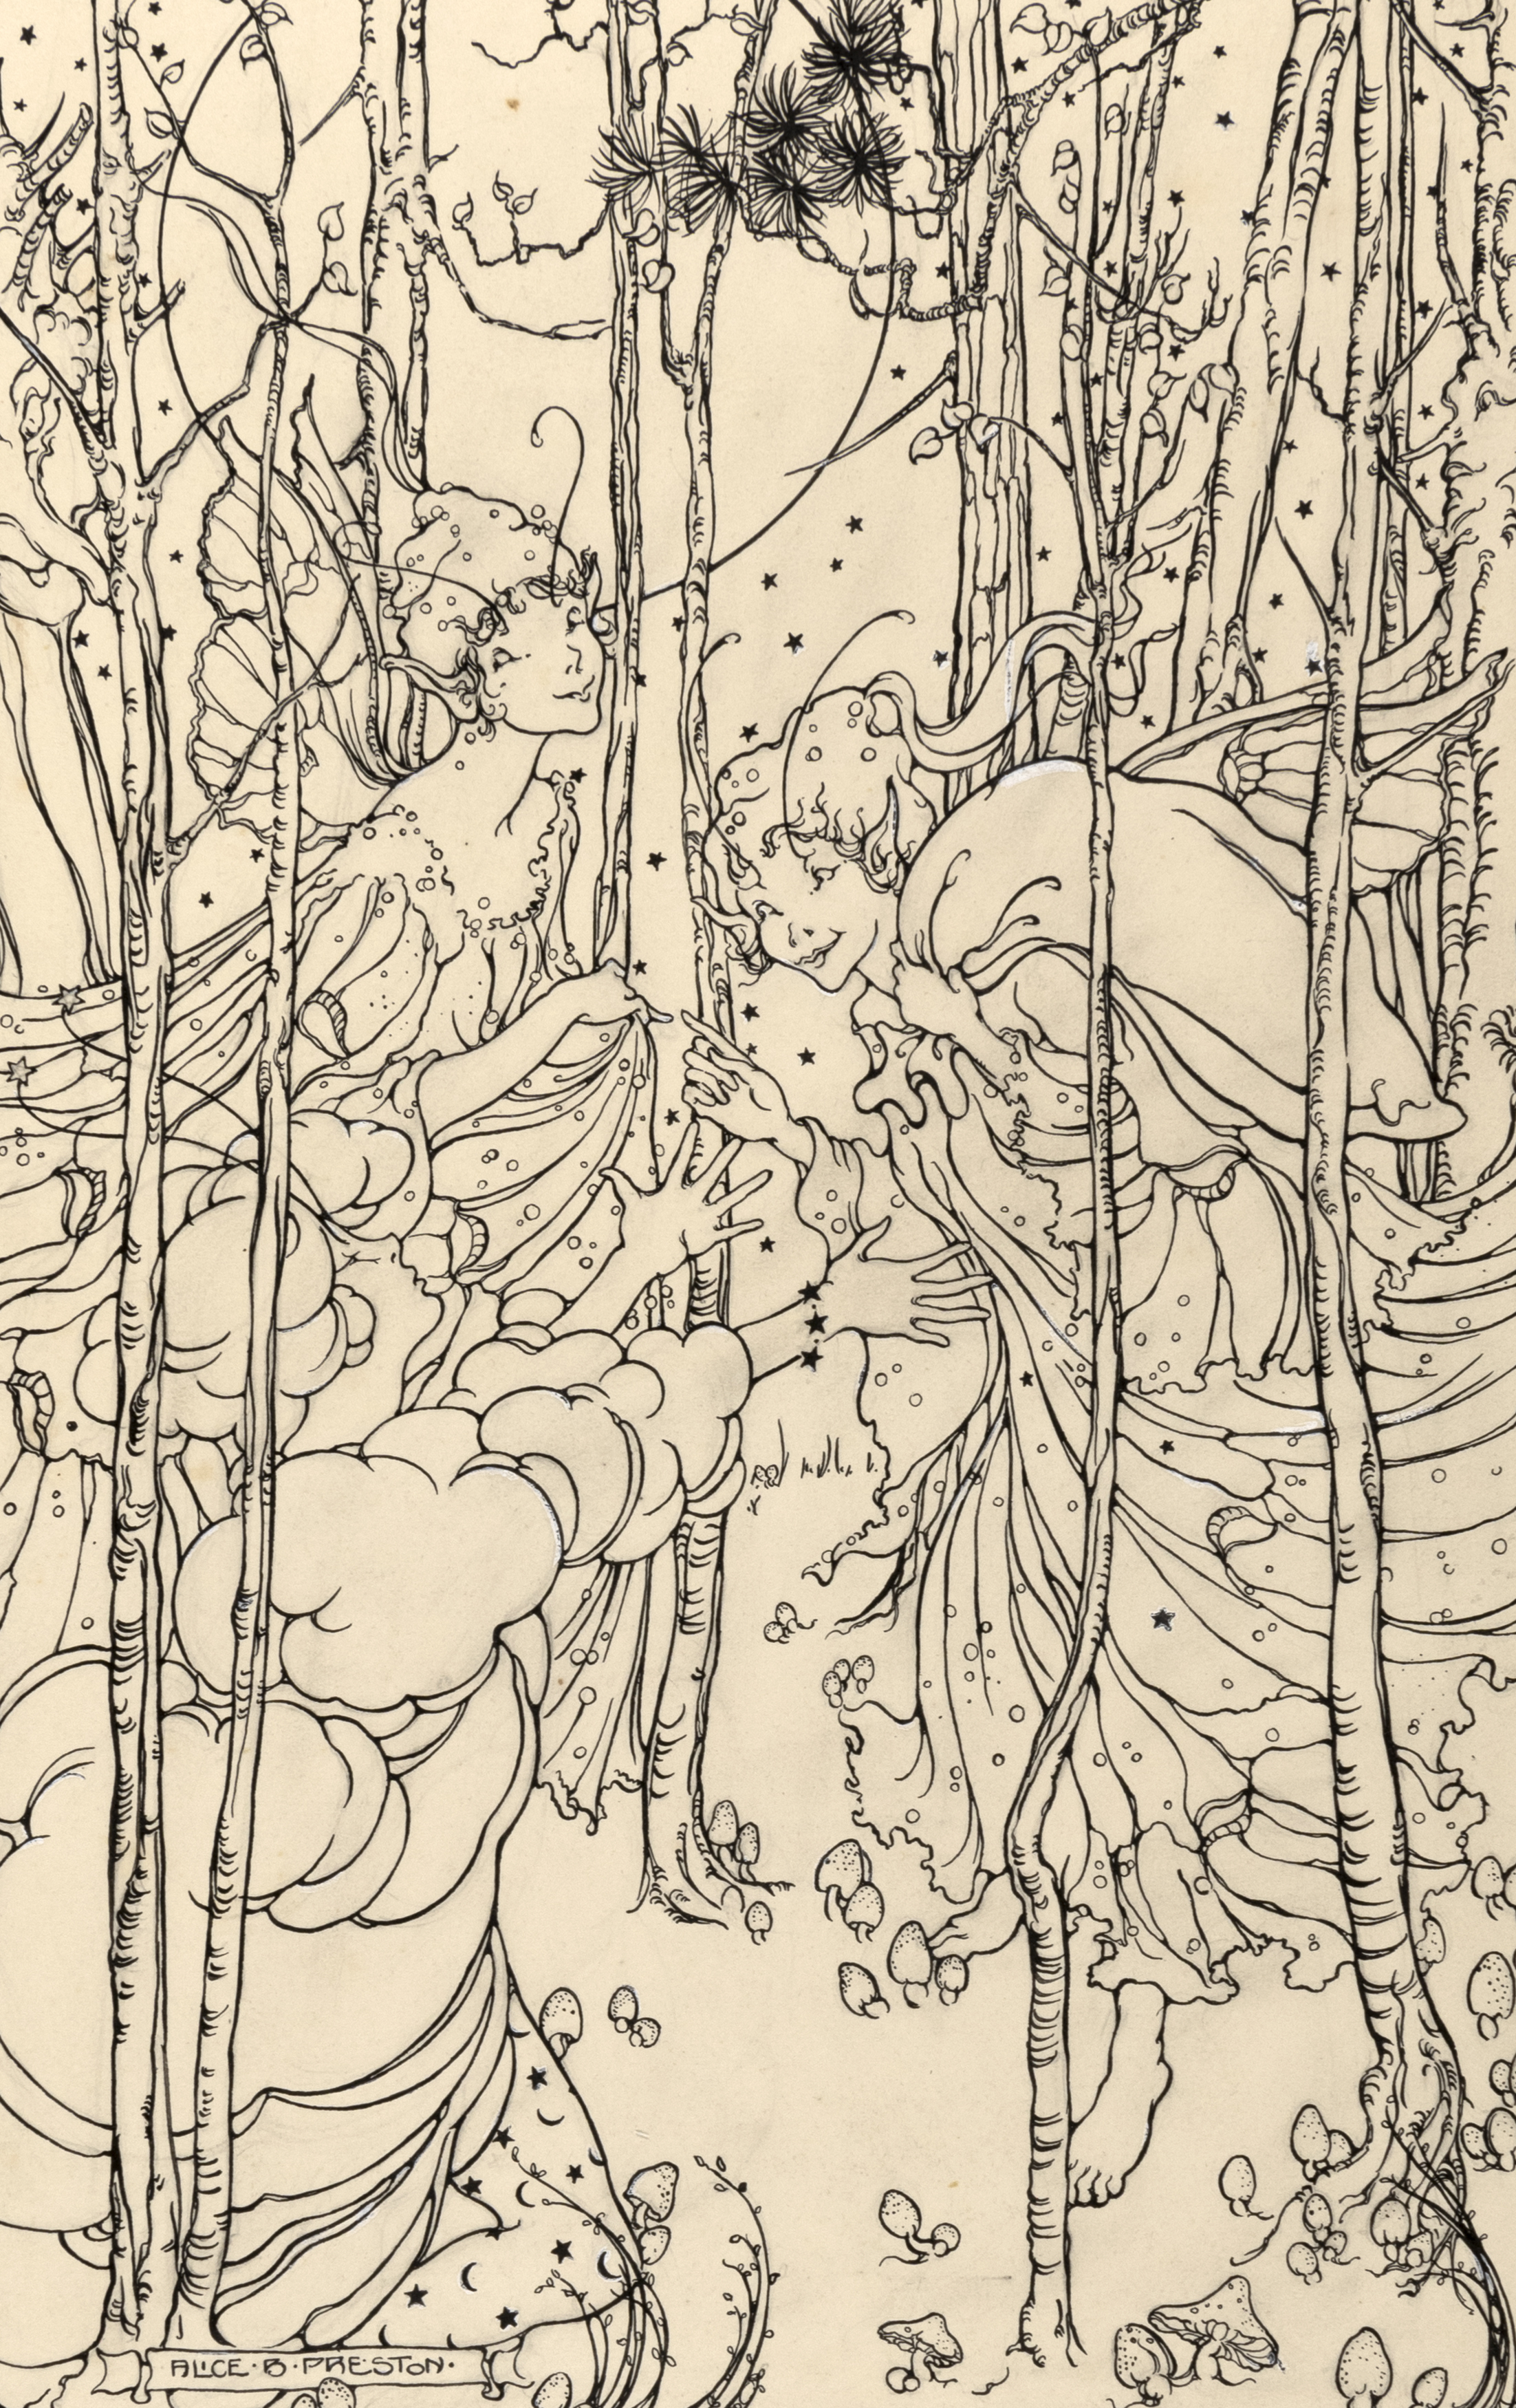 Illustration of fairies in trees. 